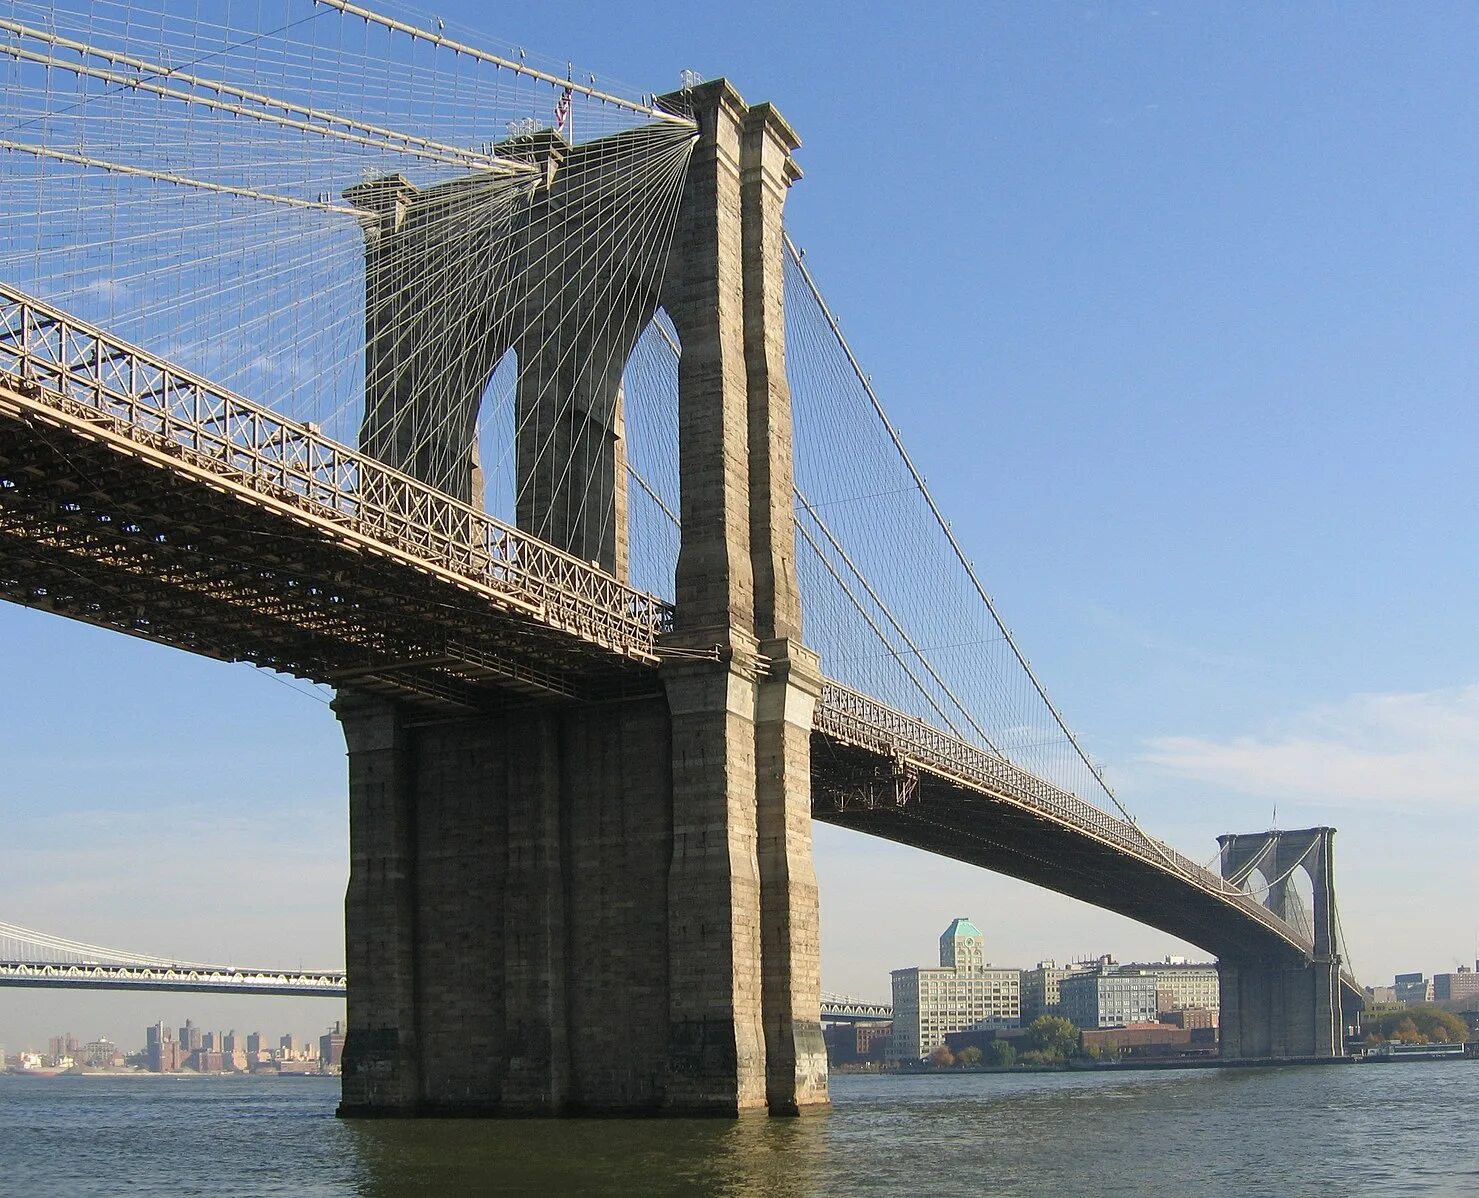 Бруклин мост. Бруклинский мост Нью-Йорк. Бруклинский мост 1883. Бруклинский мост Реблинг. Бру́клинский мост в Нью-Йорке.